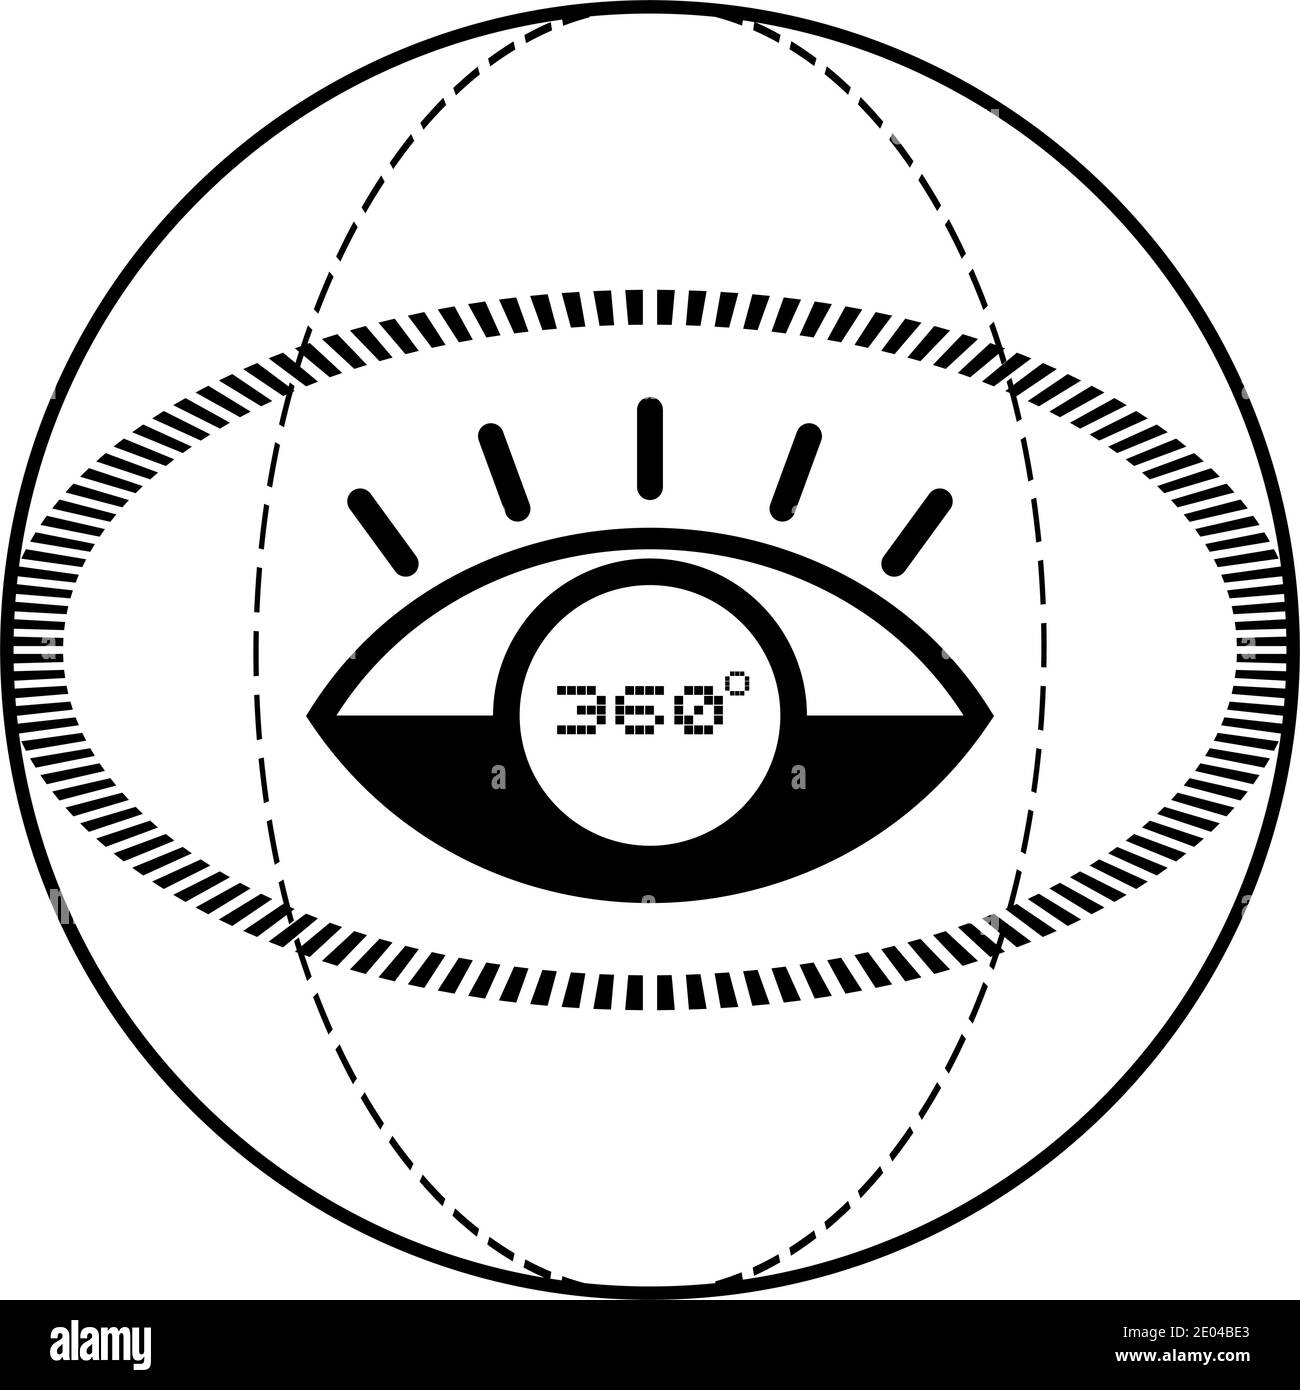 360 degress symbol Stock Vector